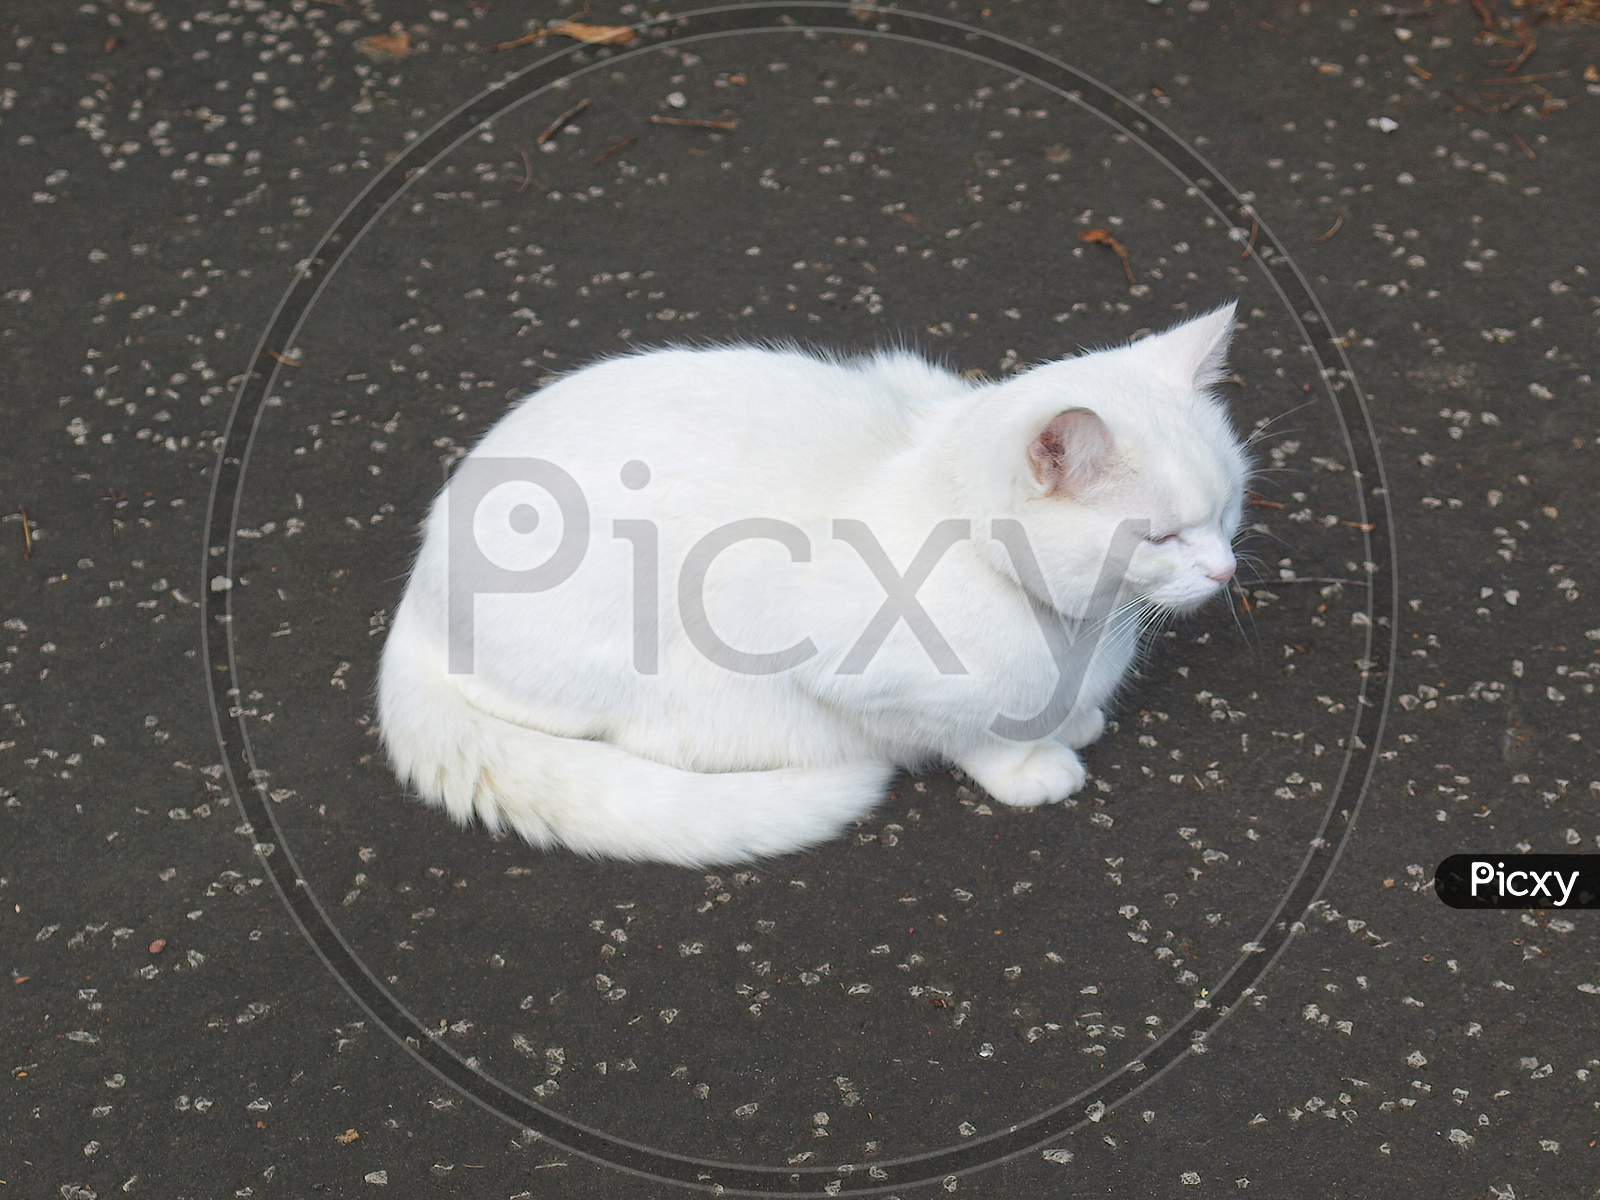 White Cat On Pavement